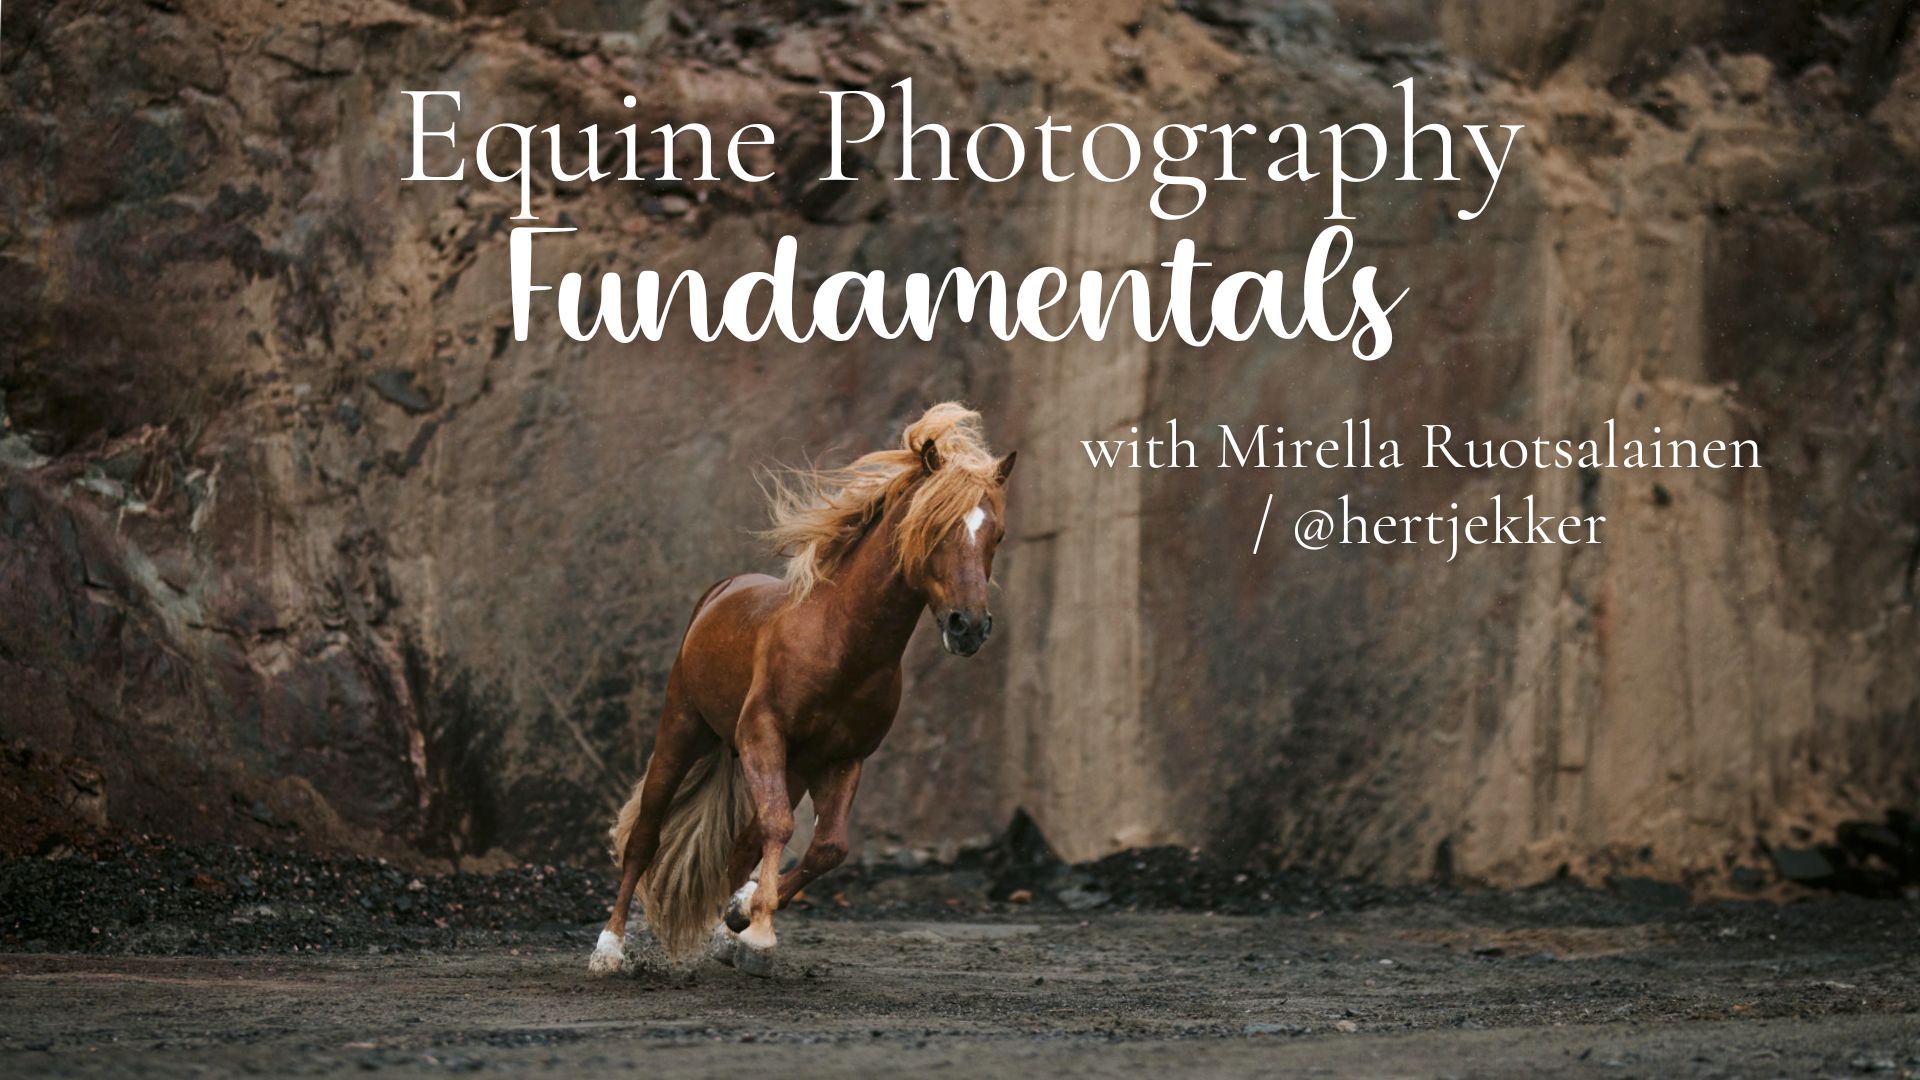 Equine Fundamentals with Mirella Ruotsalainen